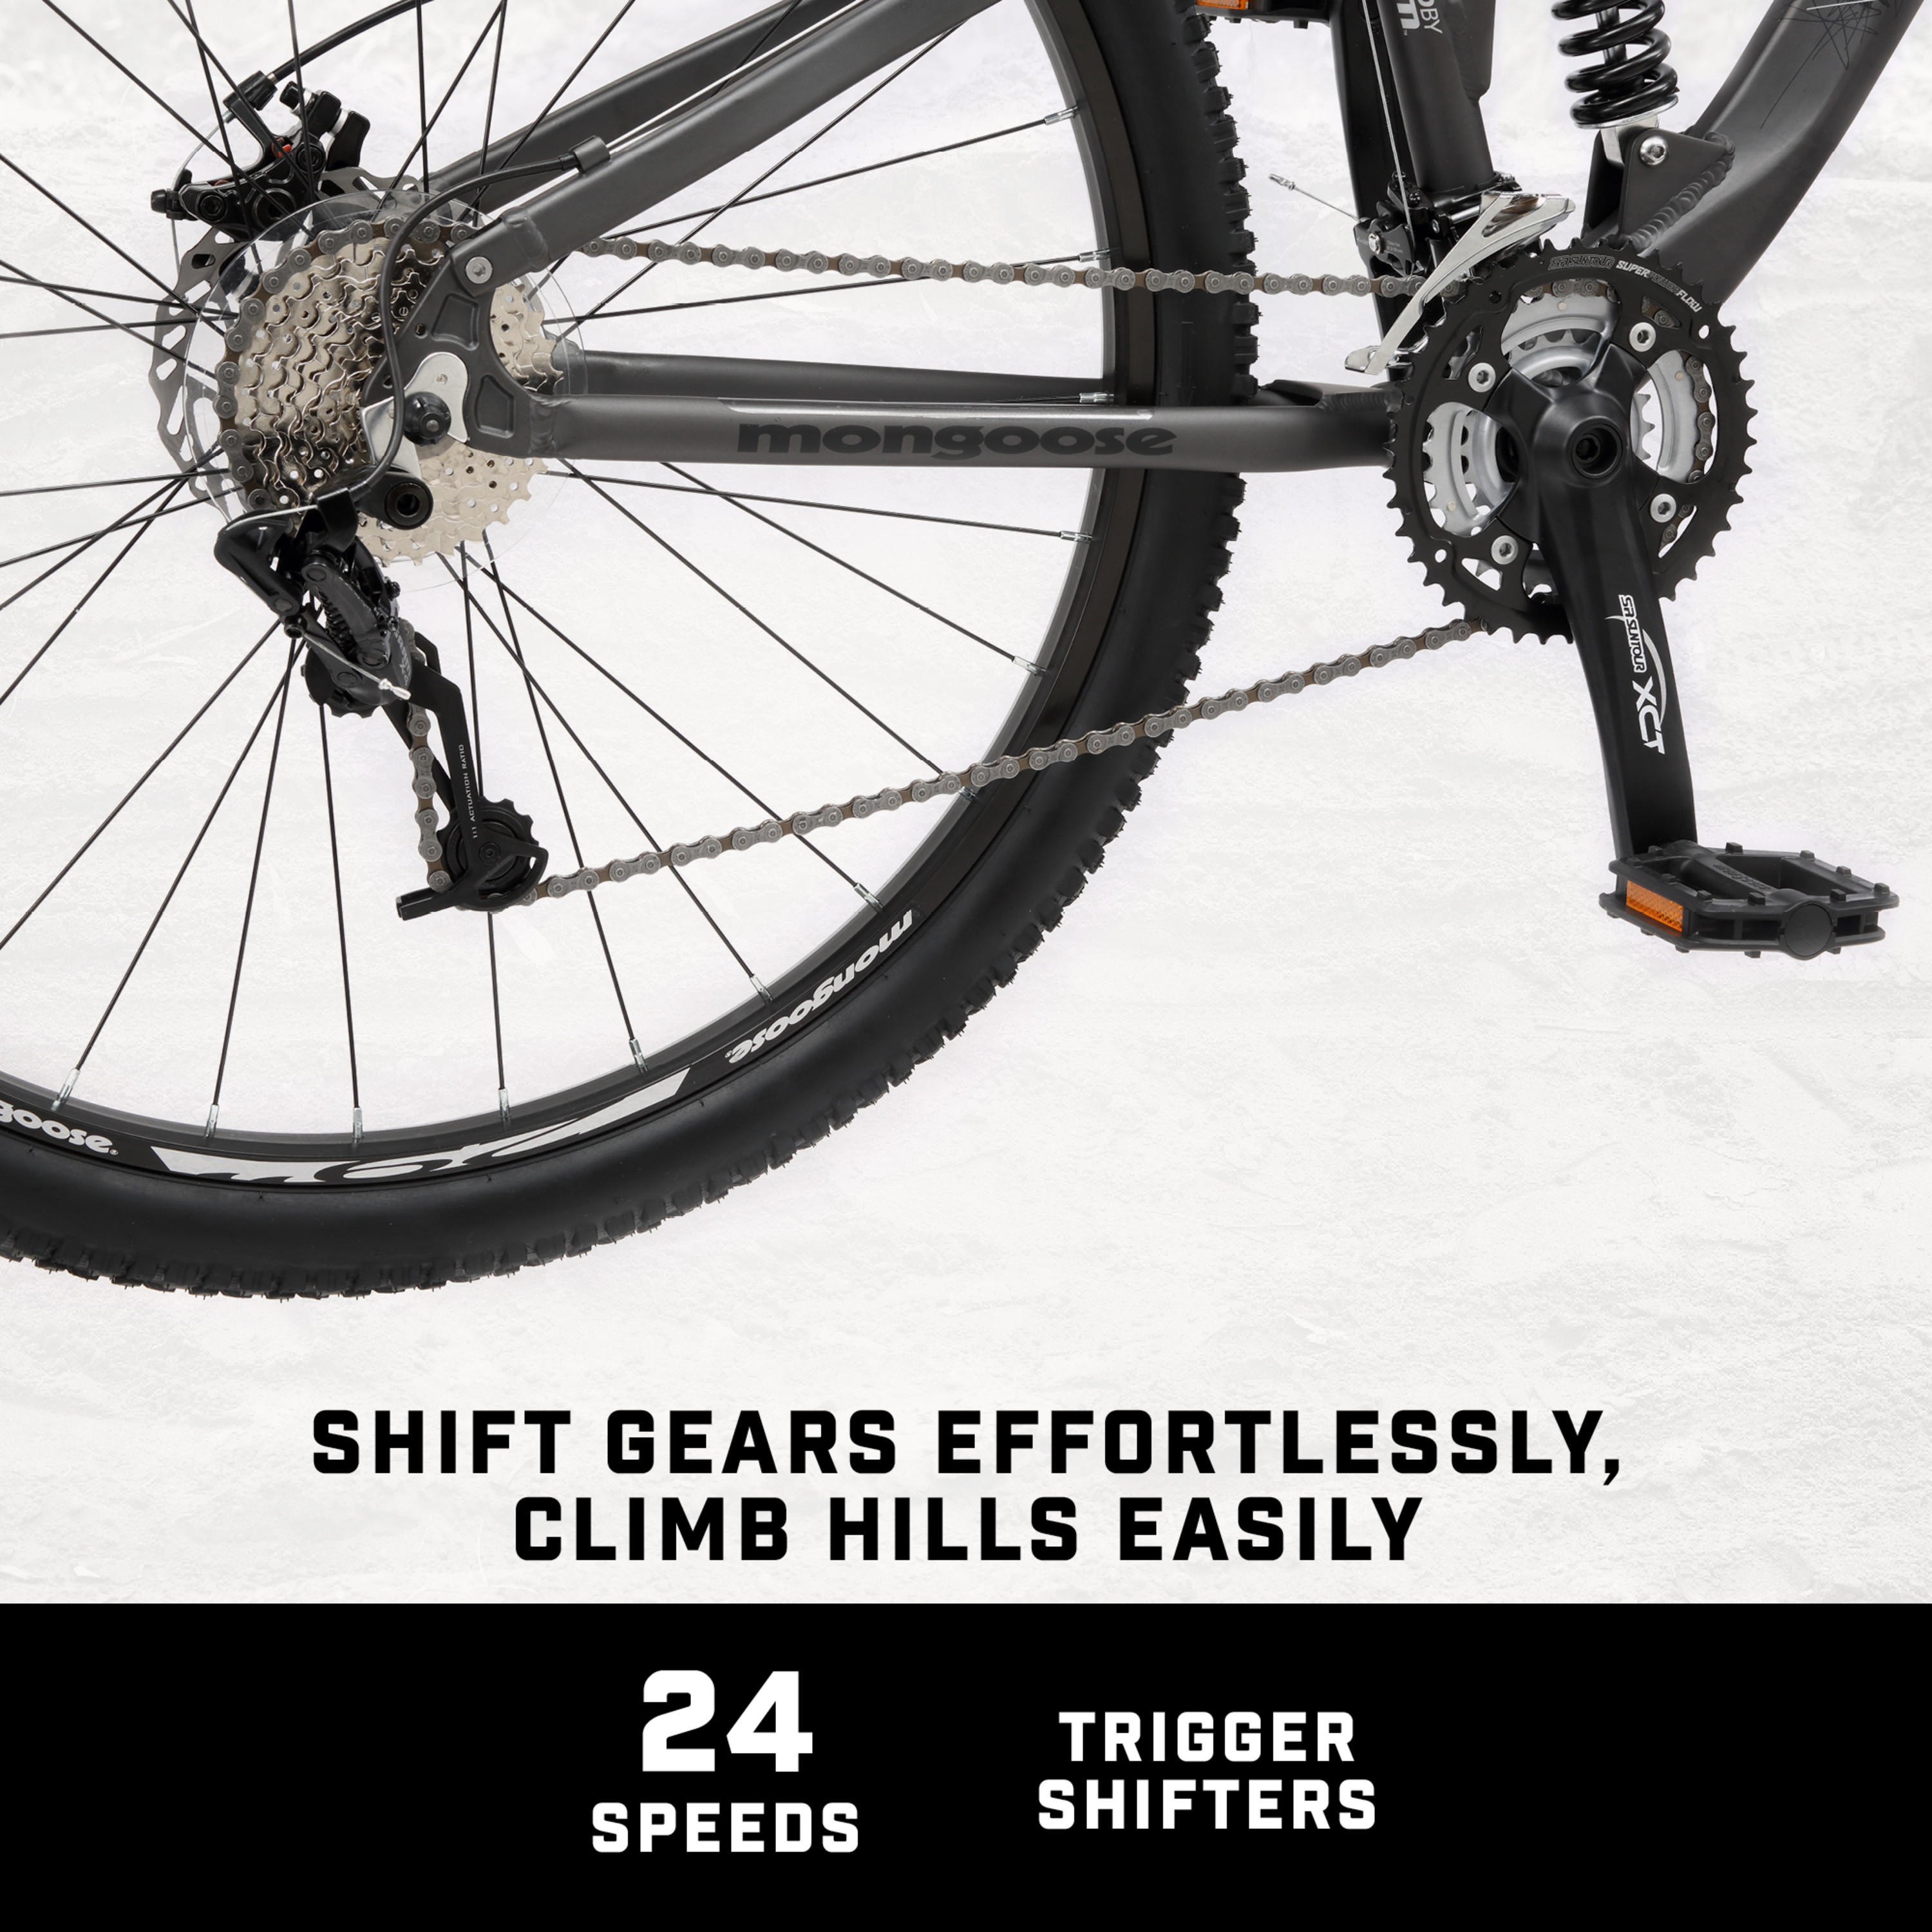 Mongoose XR-Pro Men's Mountain Bicycle, 29-inch Wheels, 24 Speeds, Black - image 5 of 8